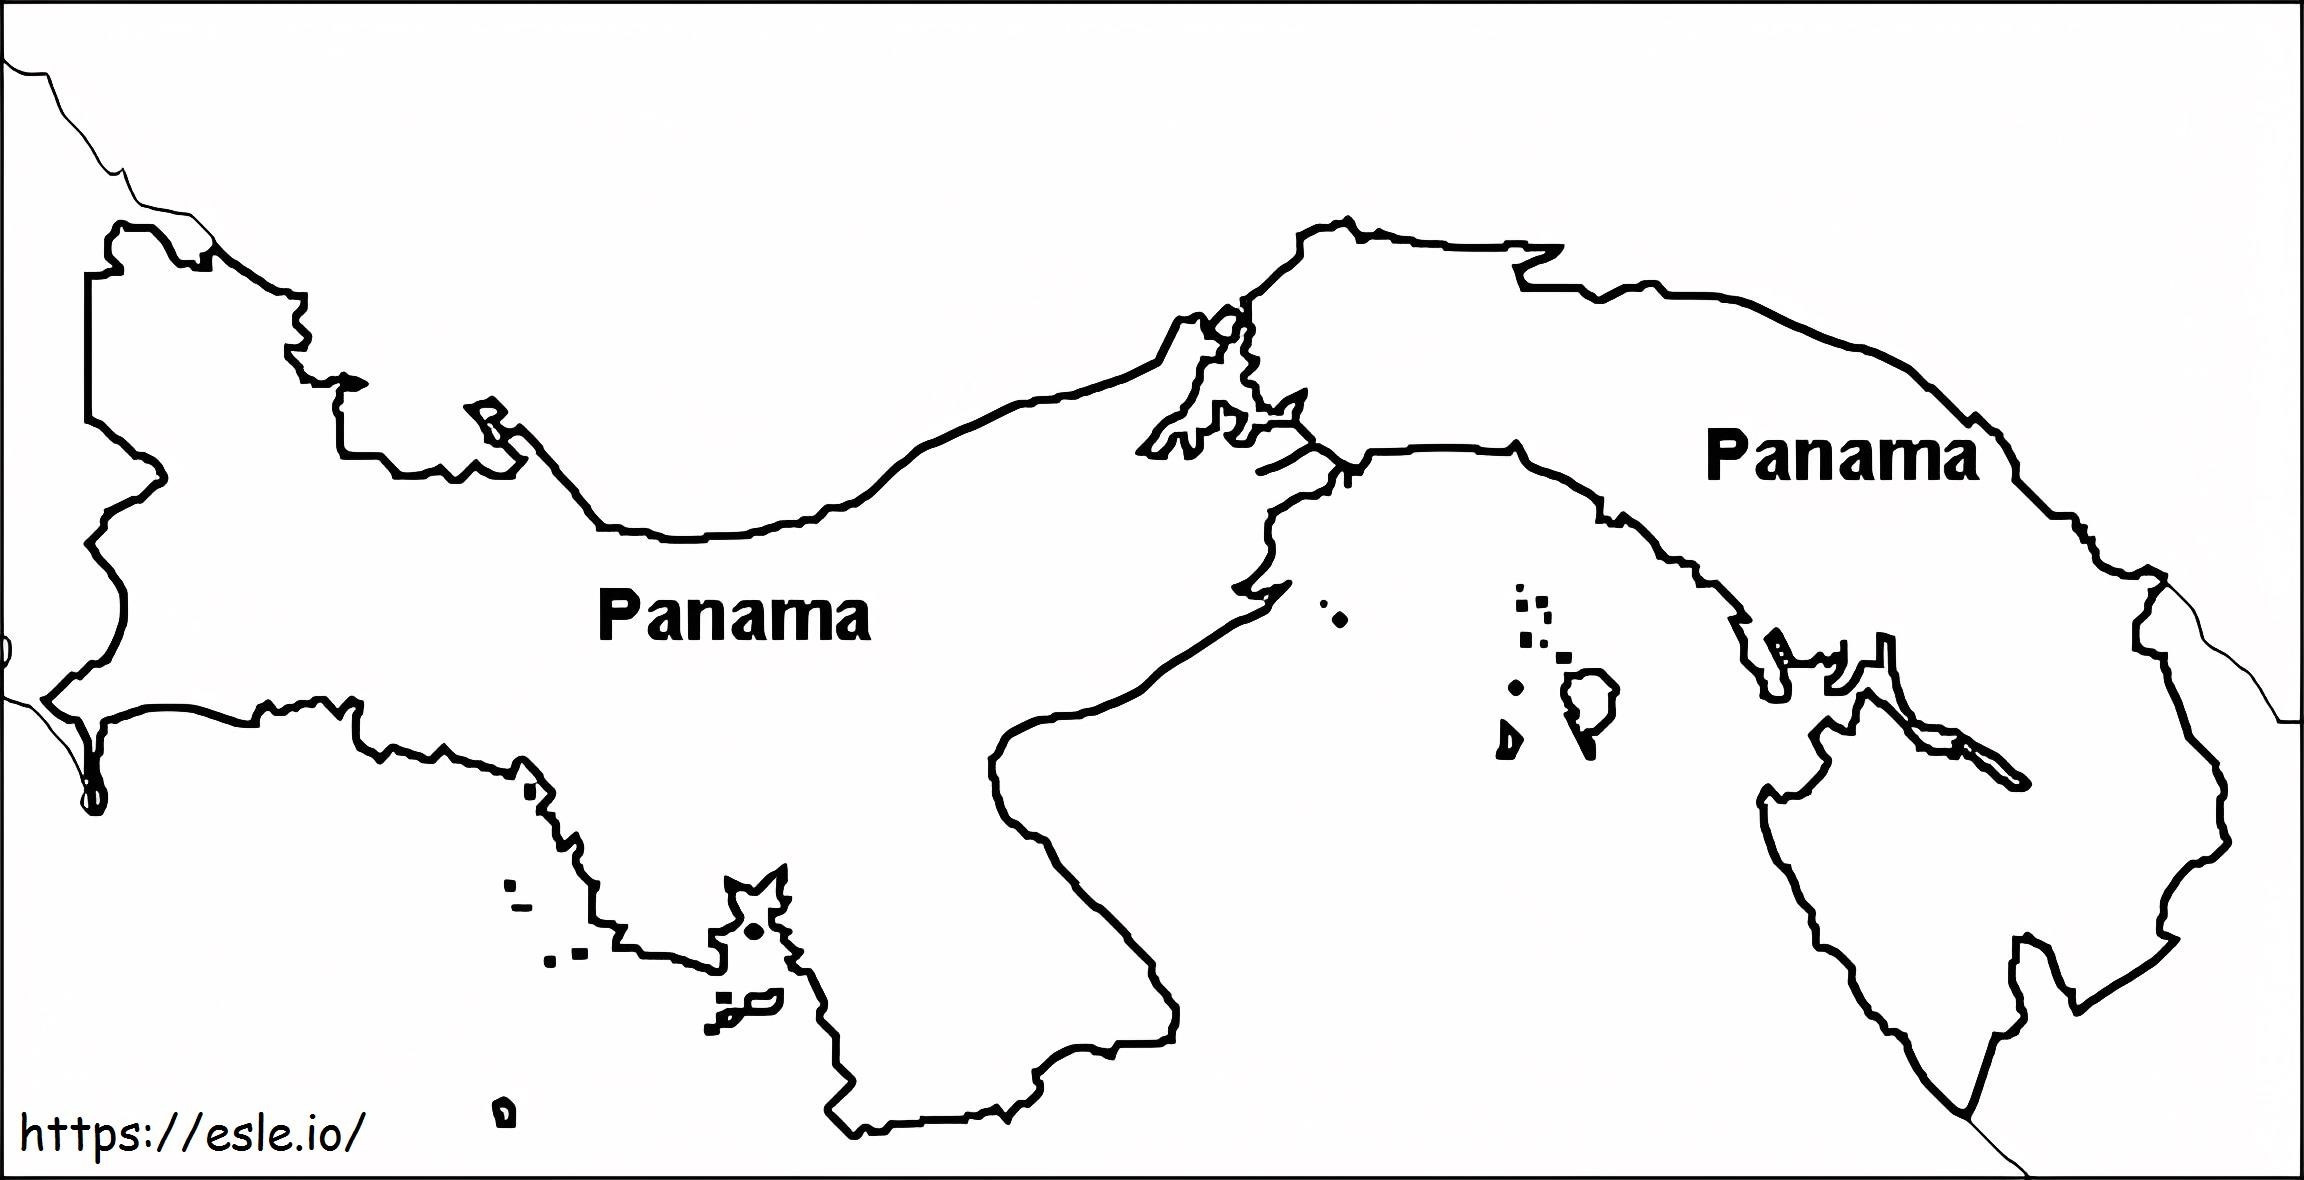  Panama4 kolorowanka